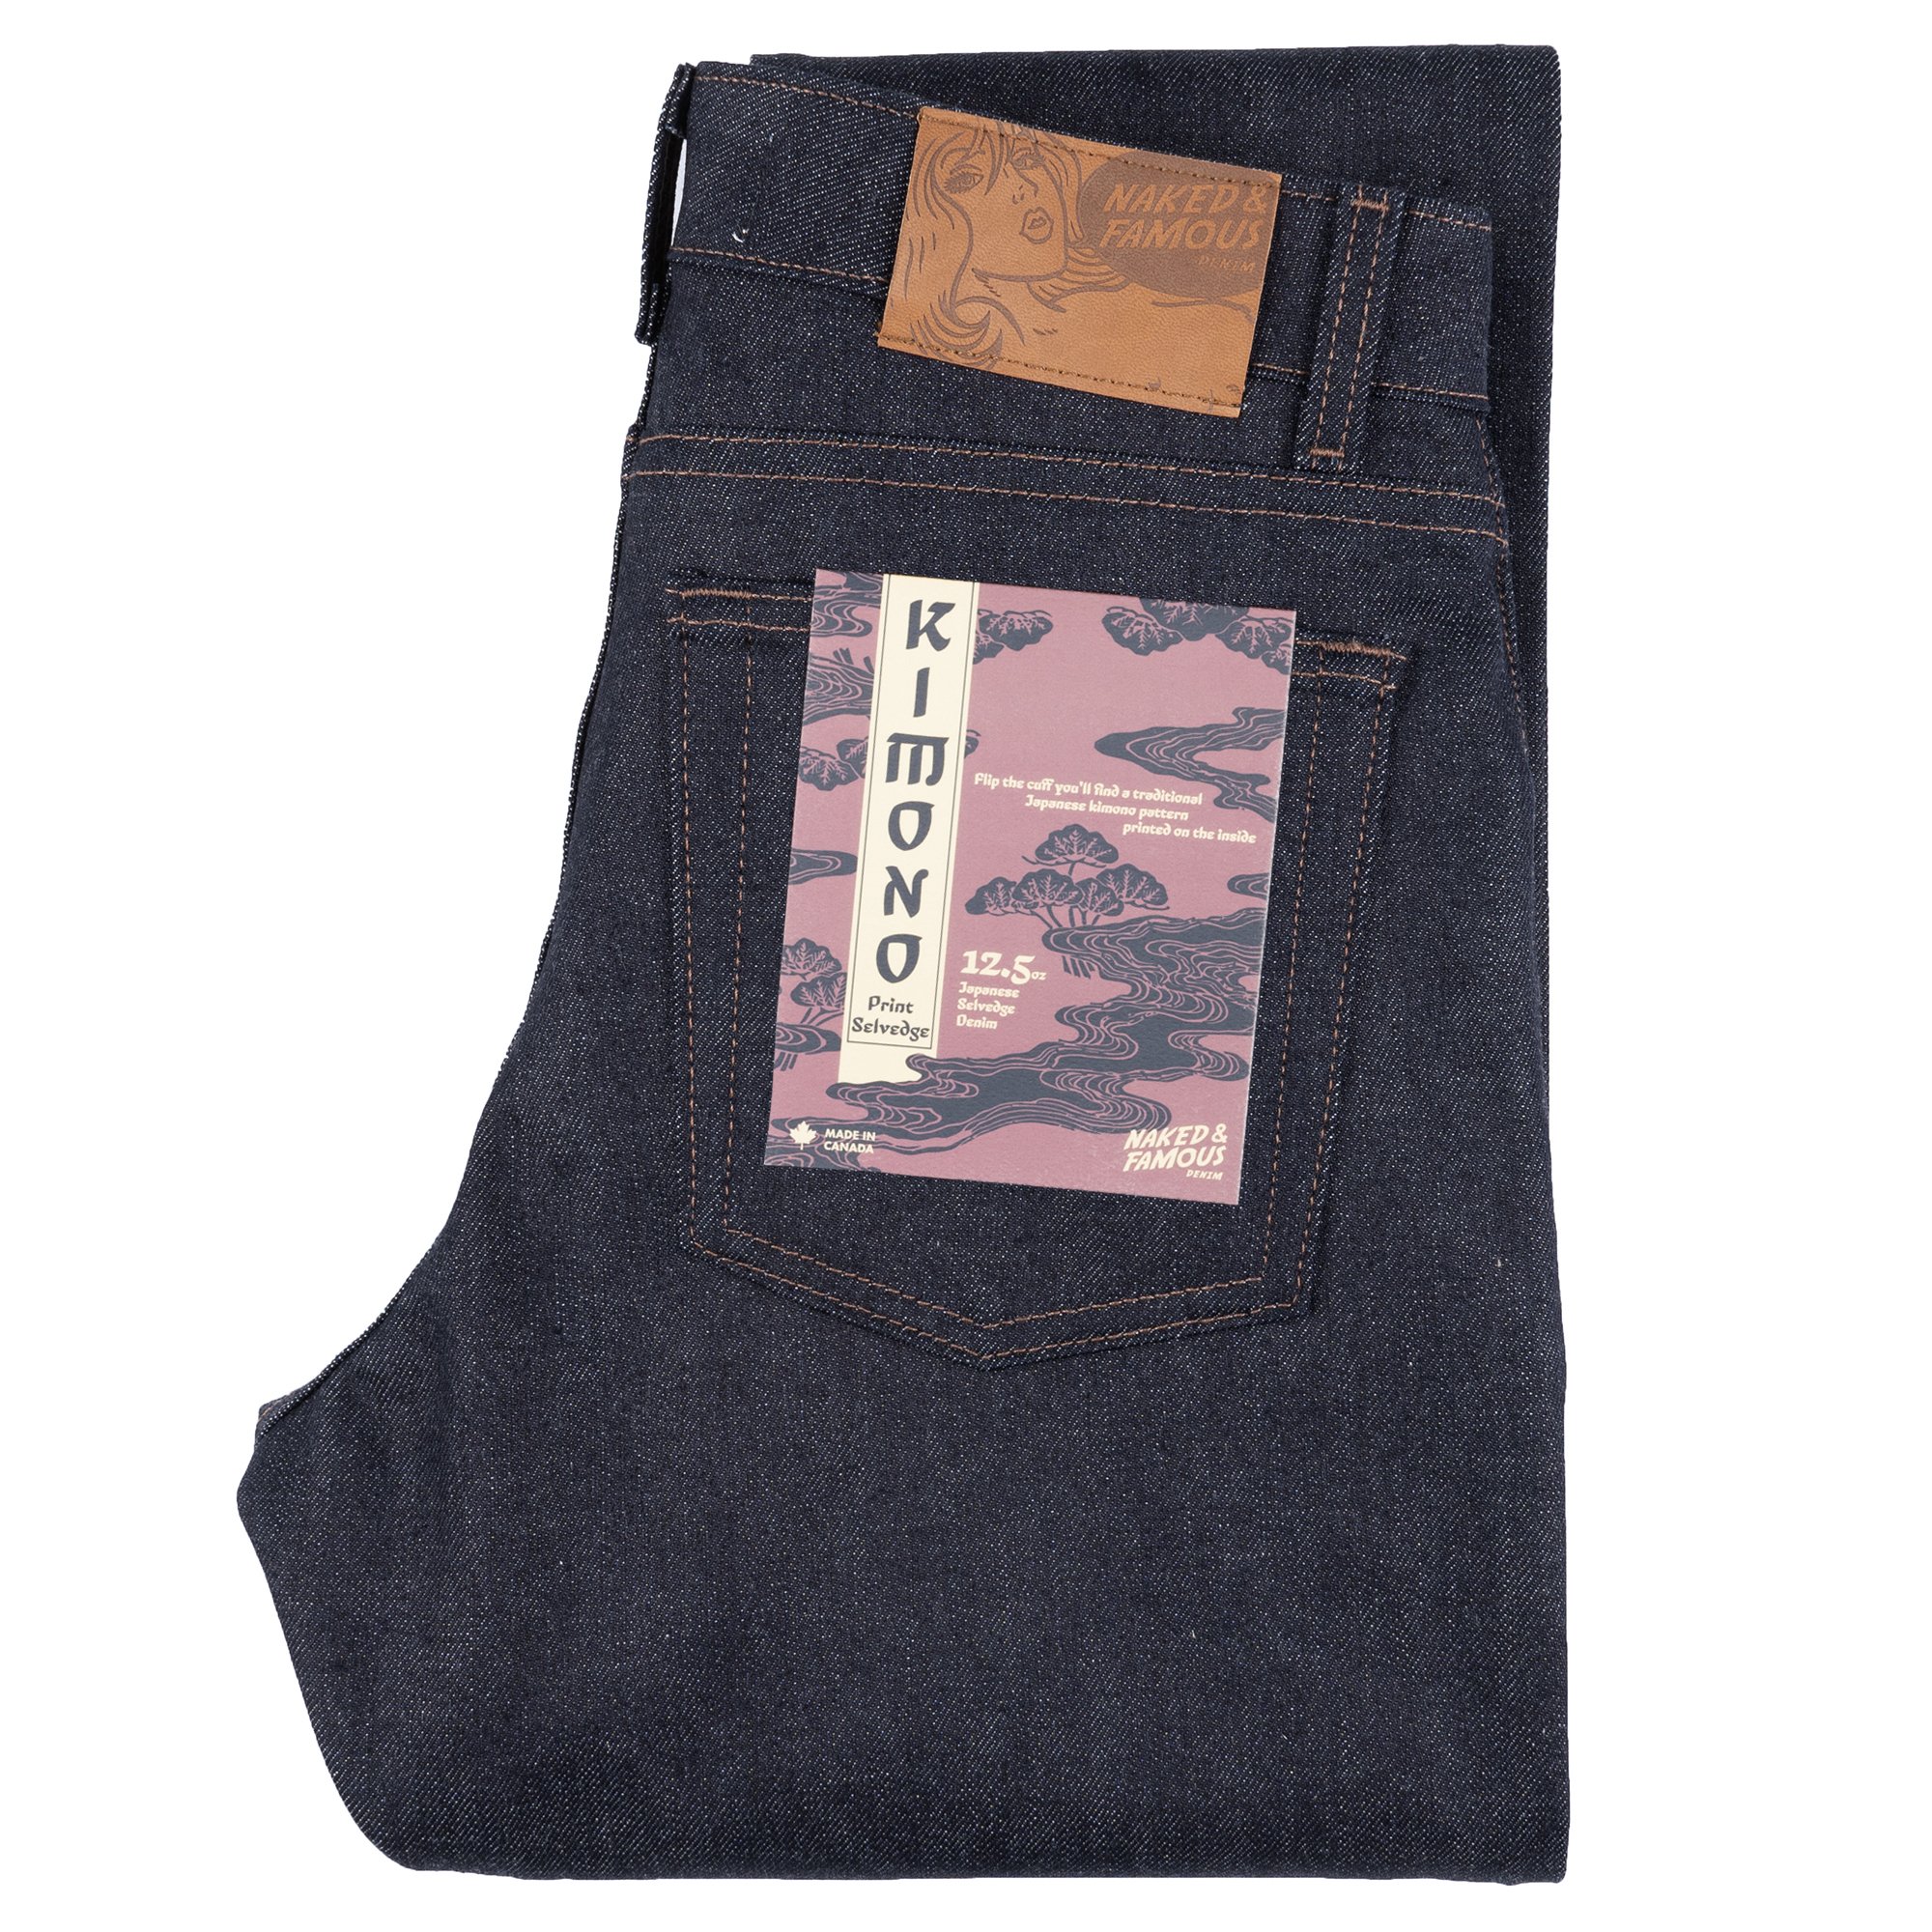  Kimono Print Selvedge - Women’s Jeans 